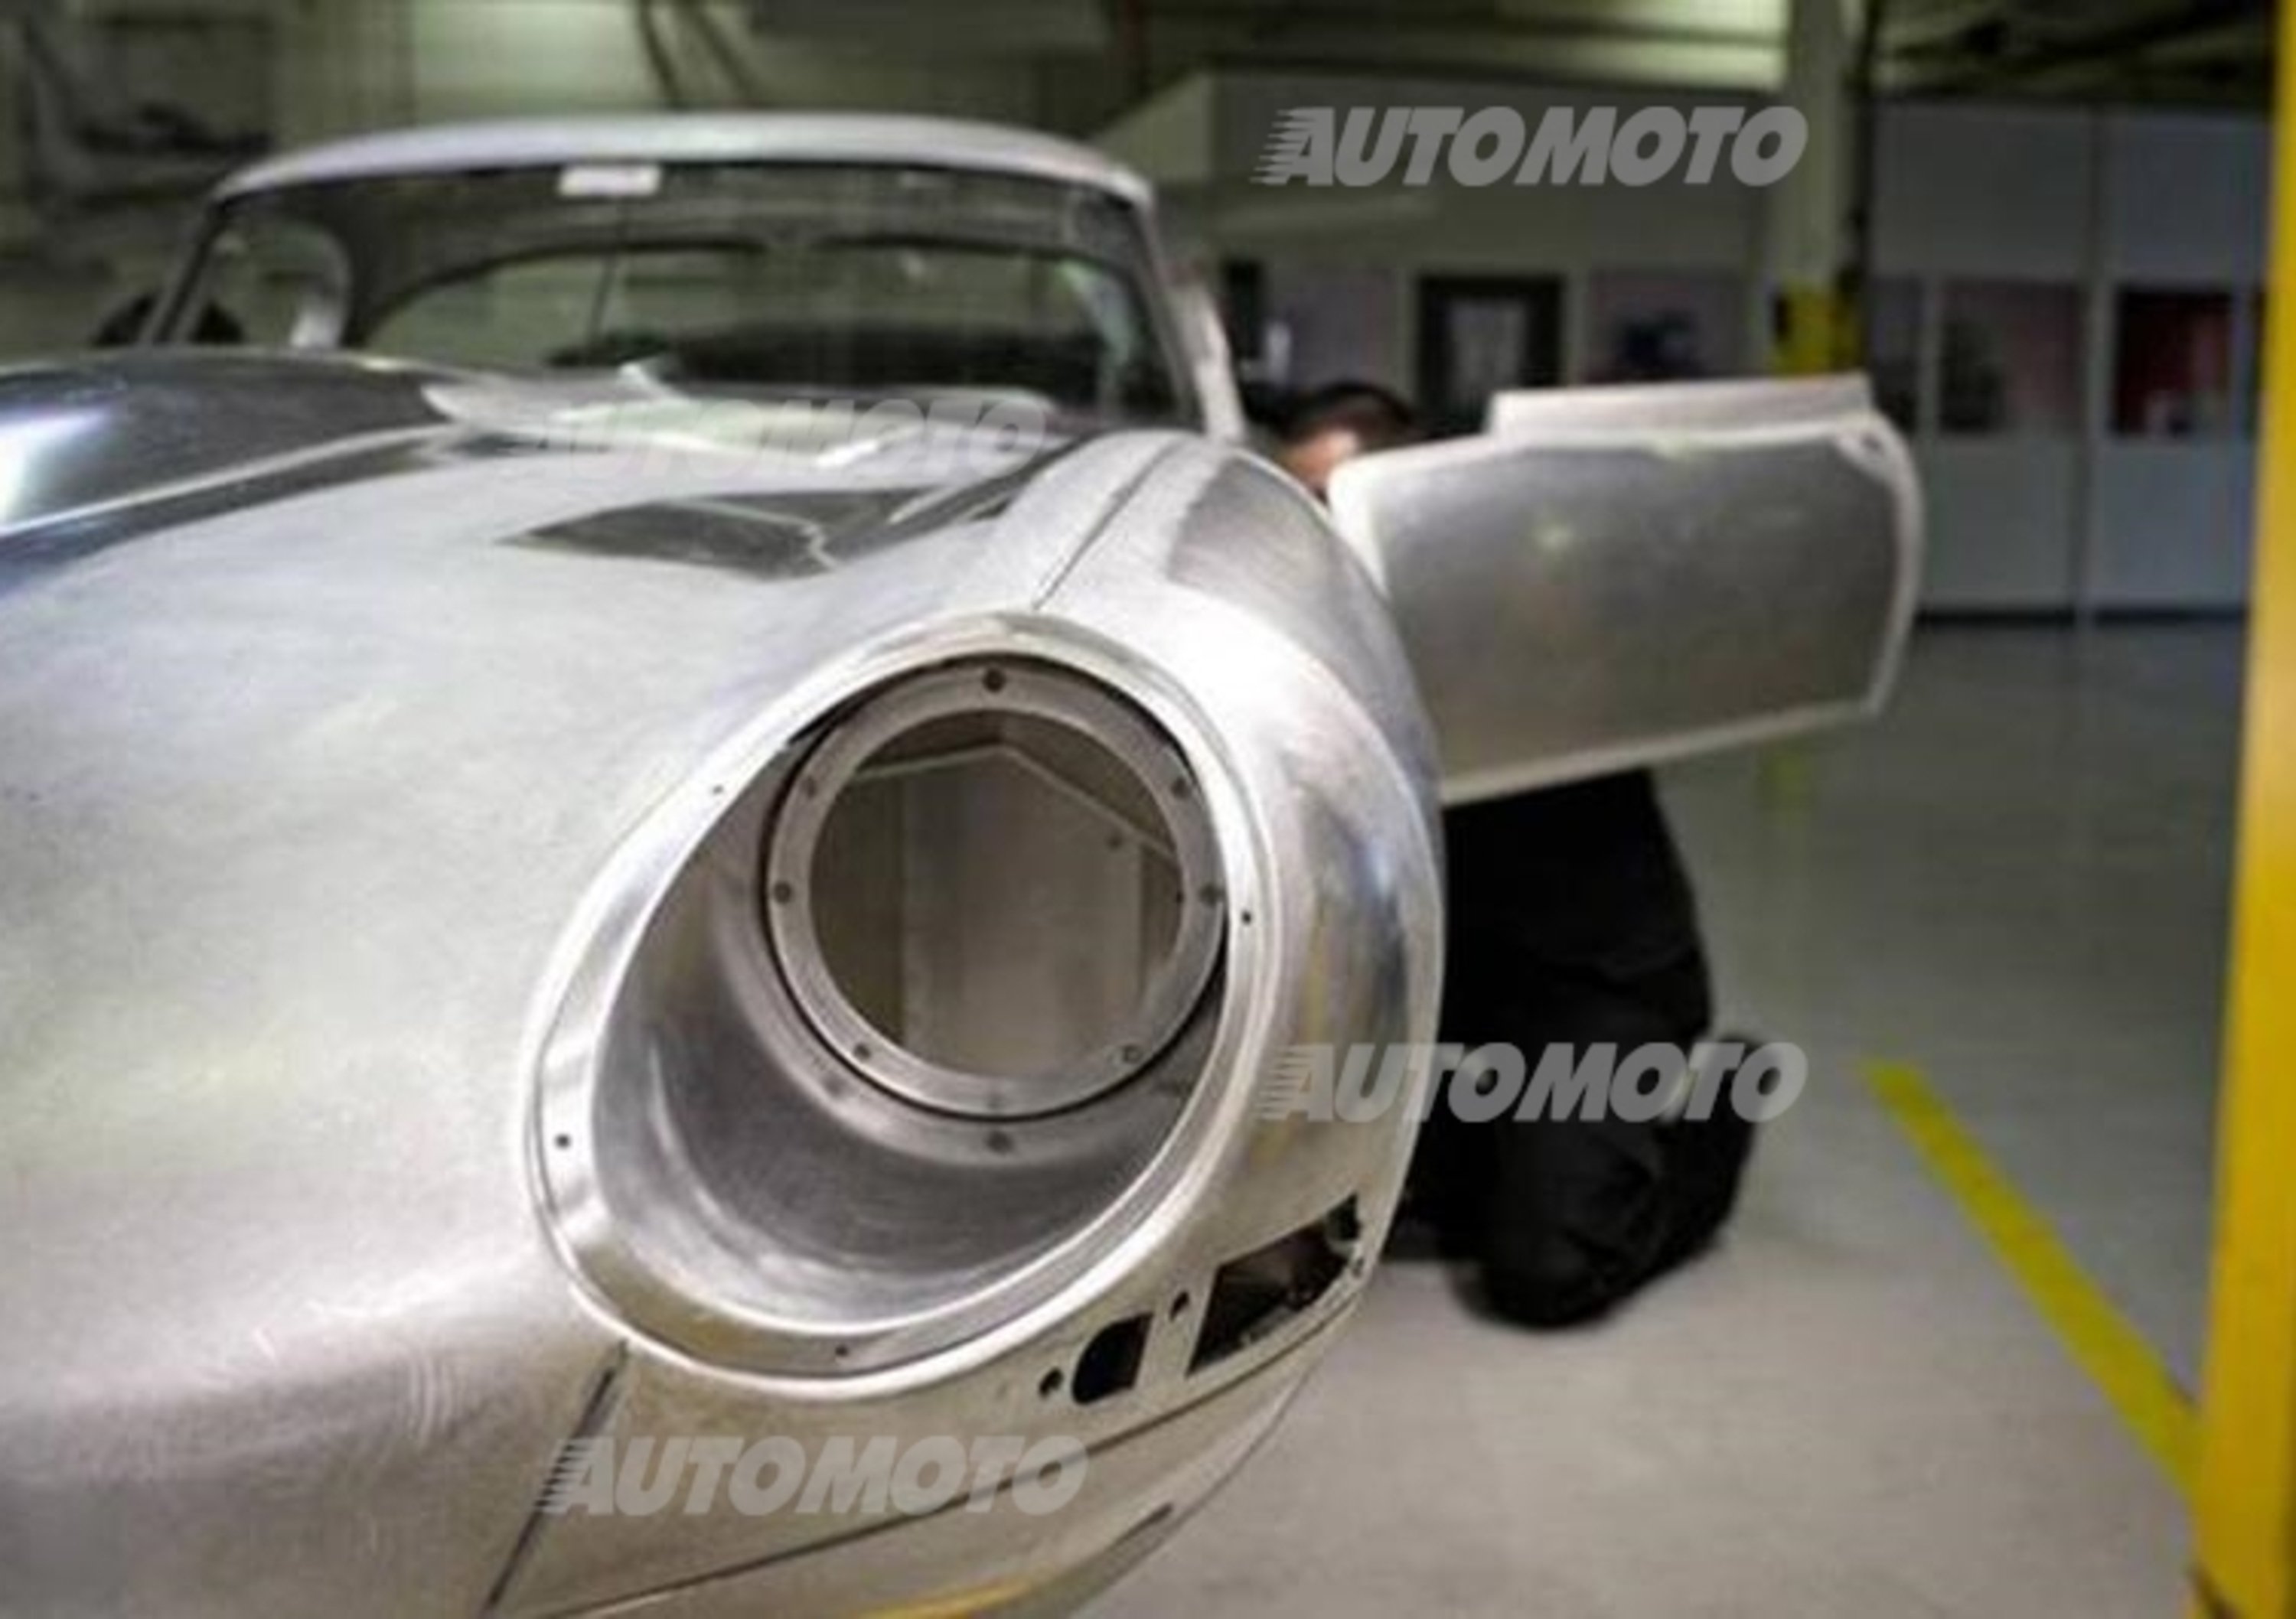 Jaguar E-Type Lightweight: verranno ricostruiti 6 esemplari